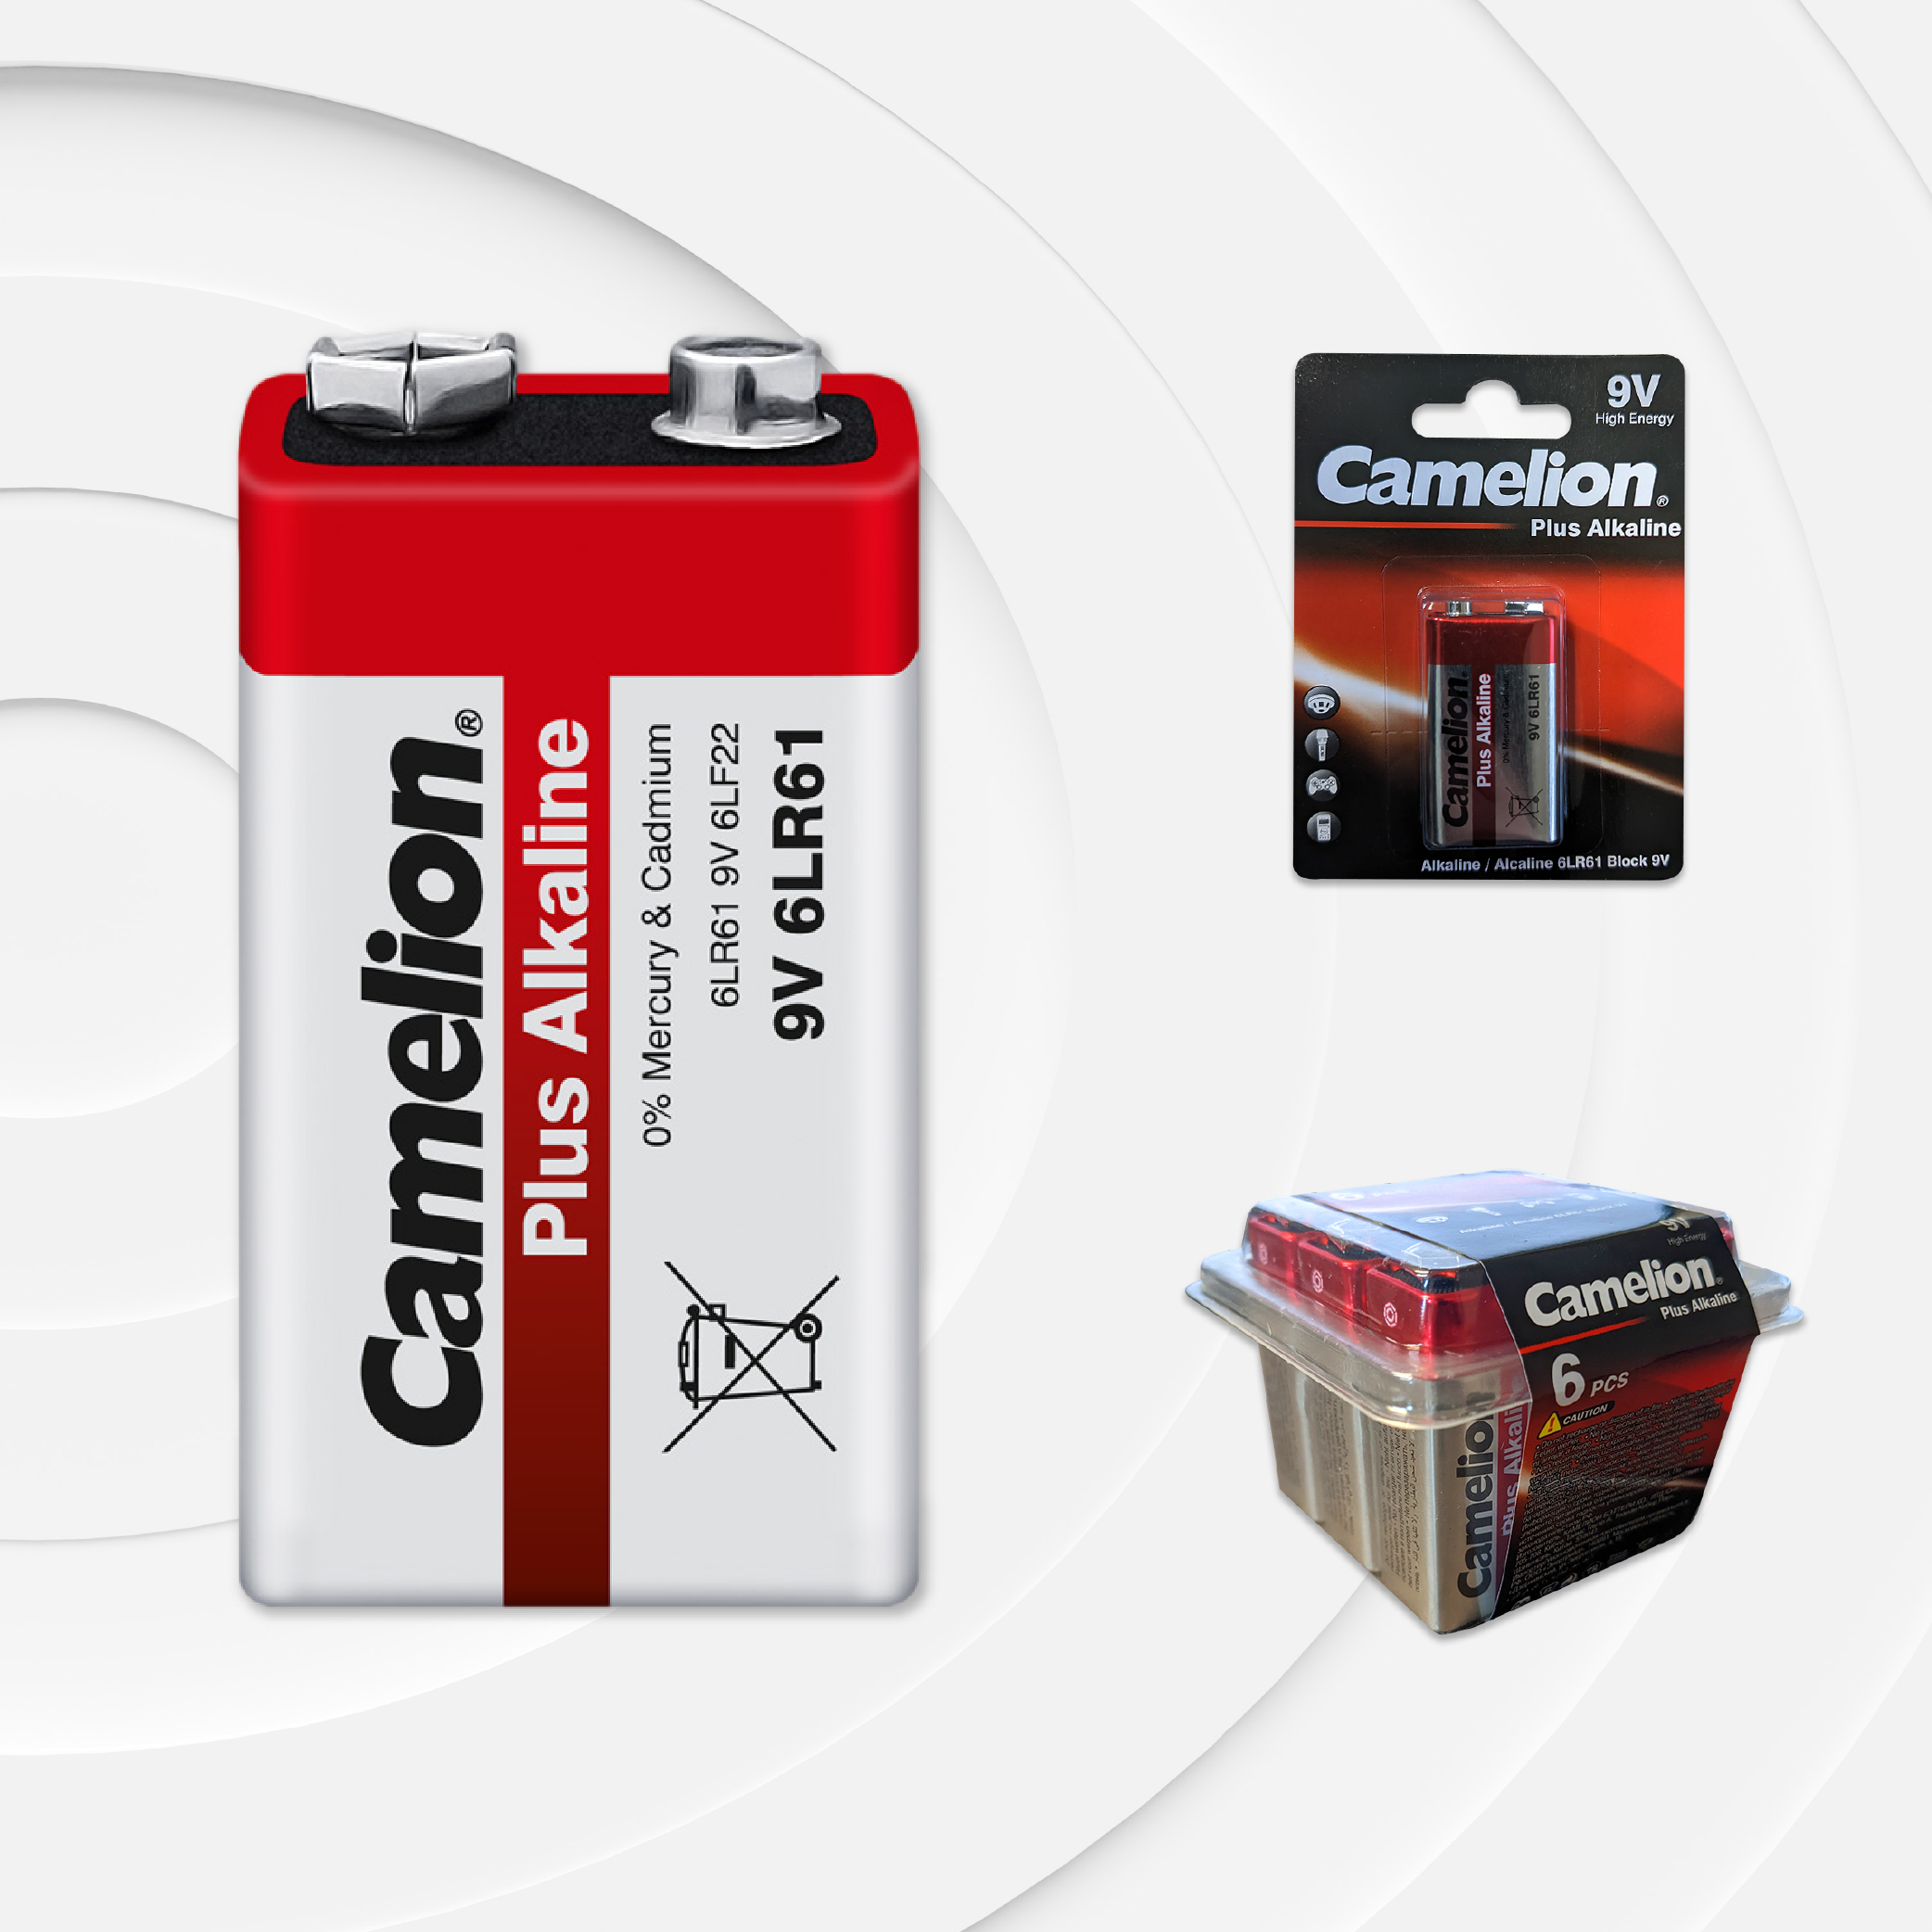 Camelion 9 Volt Plus Alkaline (Multiple Packaging Options)